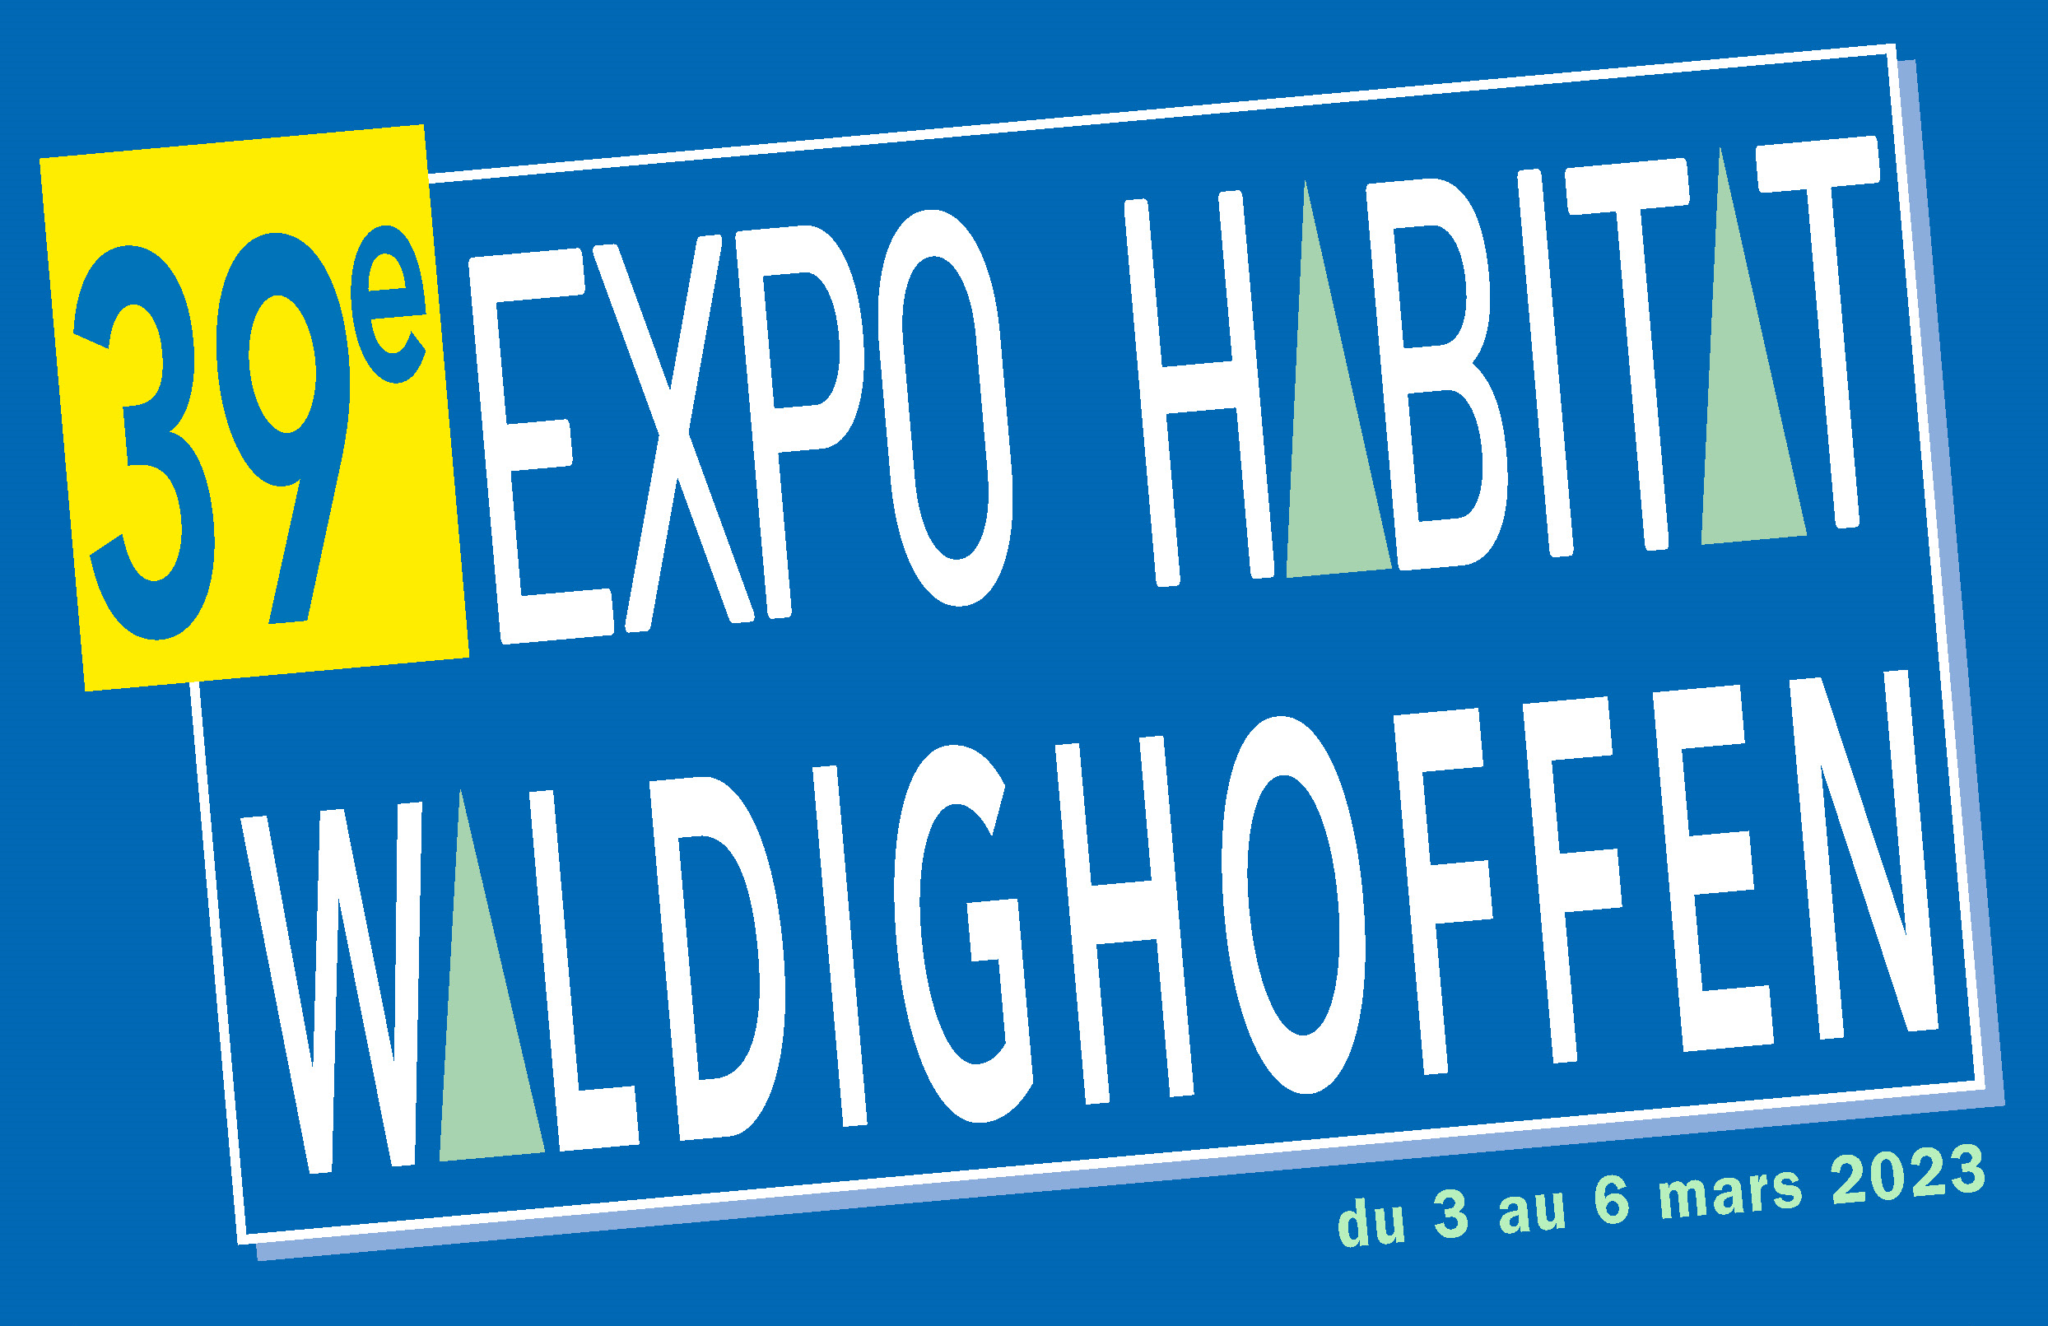 39ème EXPO-HABITAT de WALDIGHOFFEN : 3 au 6 mars 2023